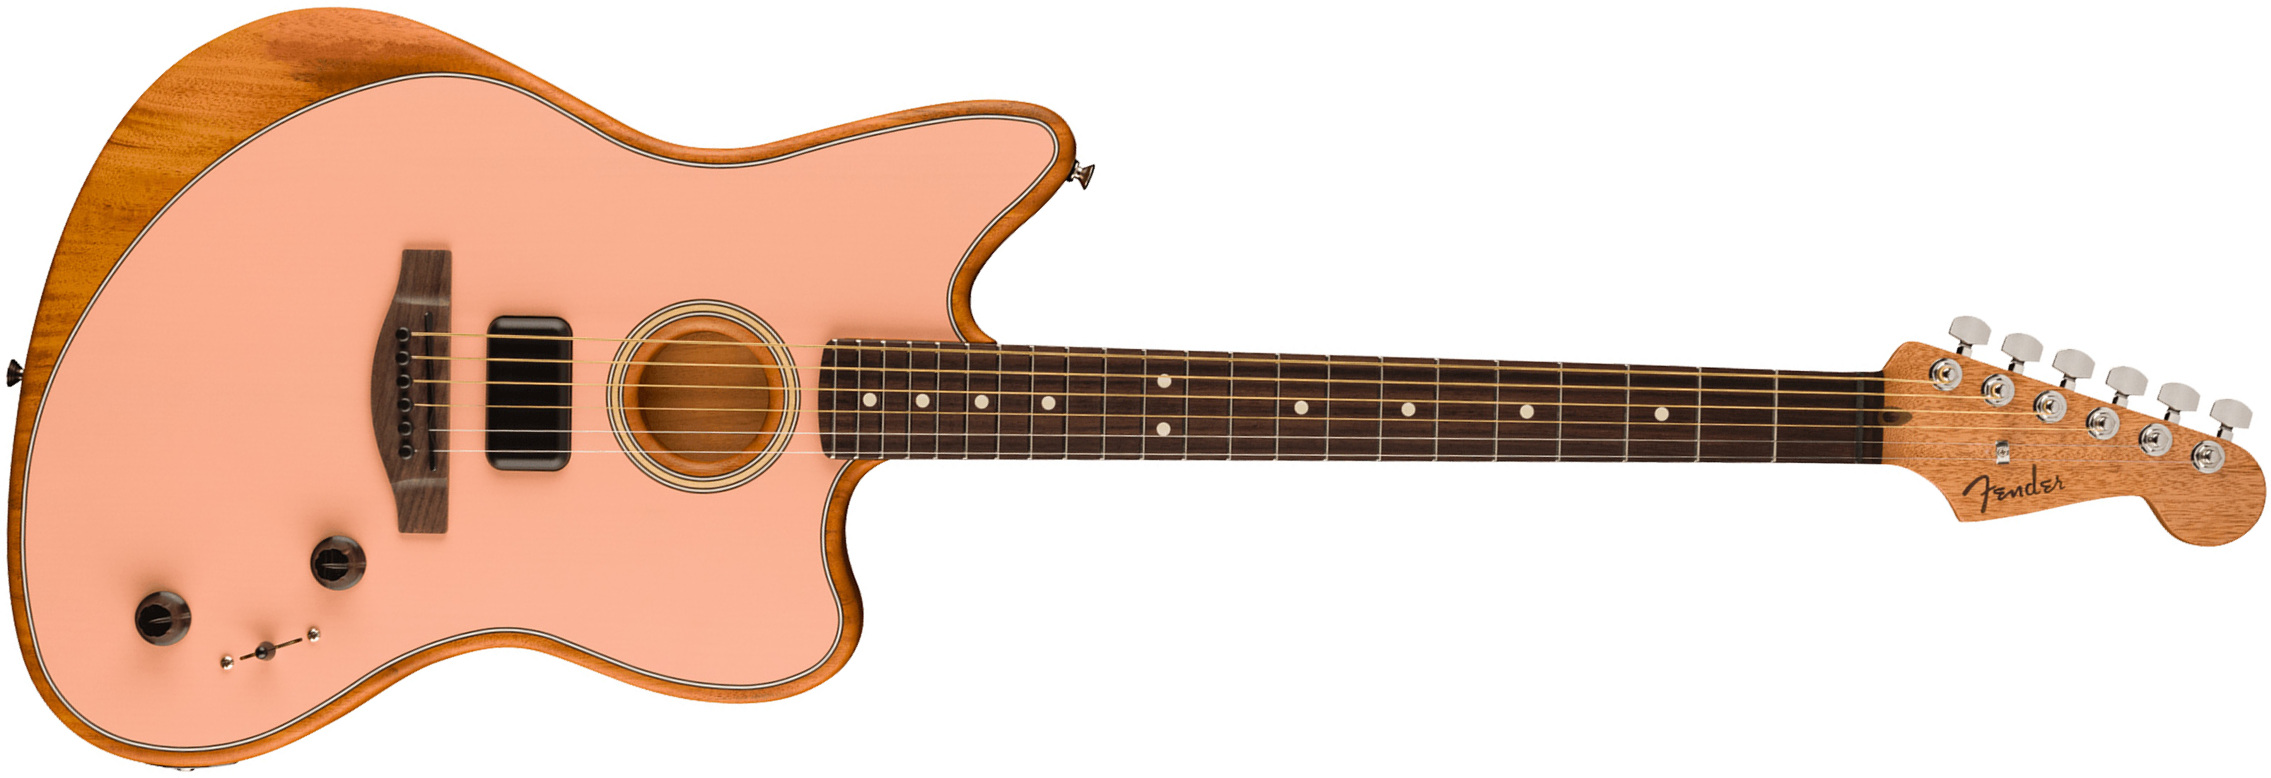 Fender Acoustasonic Jazzmaster Player Mex Epicea Acajou Rw - Shell Pink - Electro acoustic guitar - Main picture